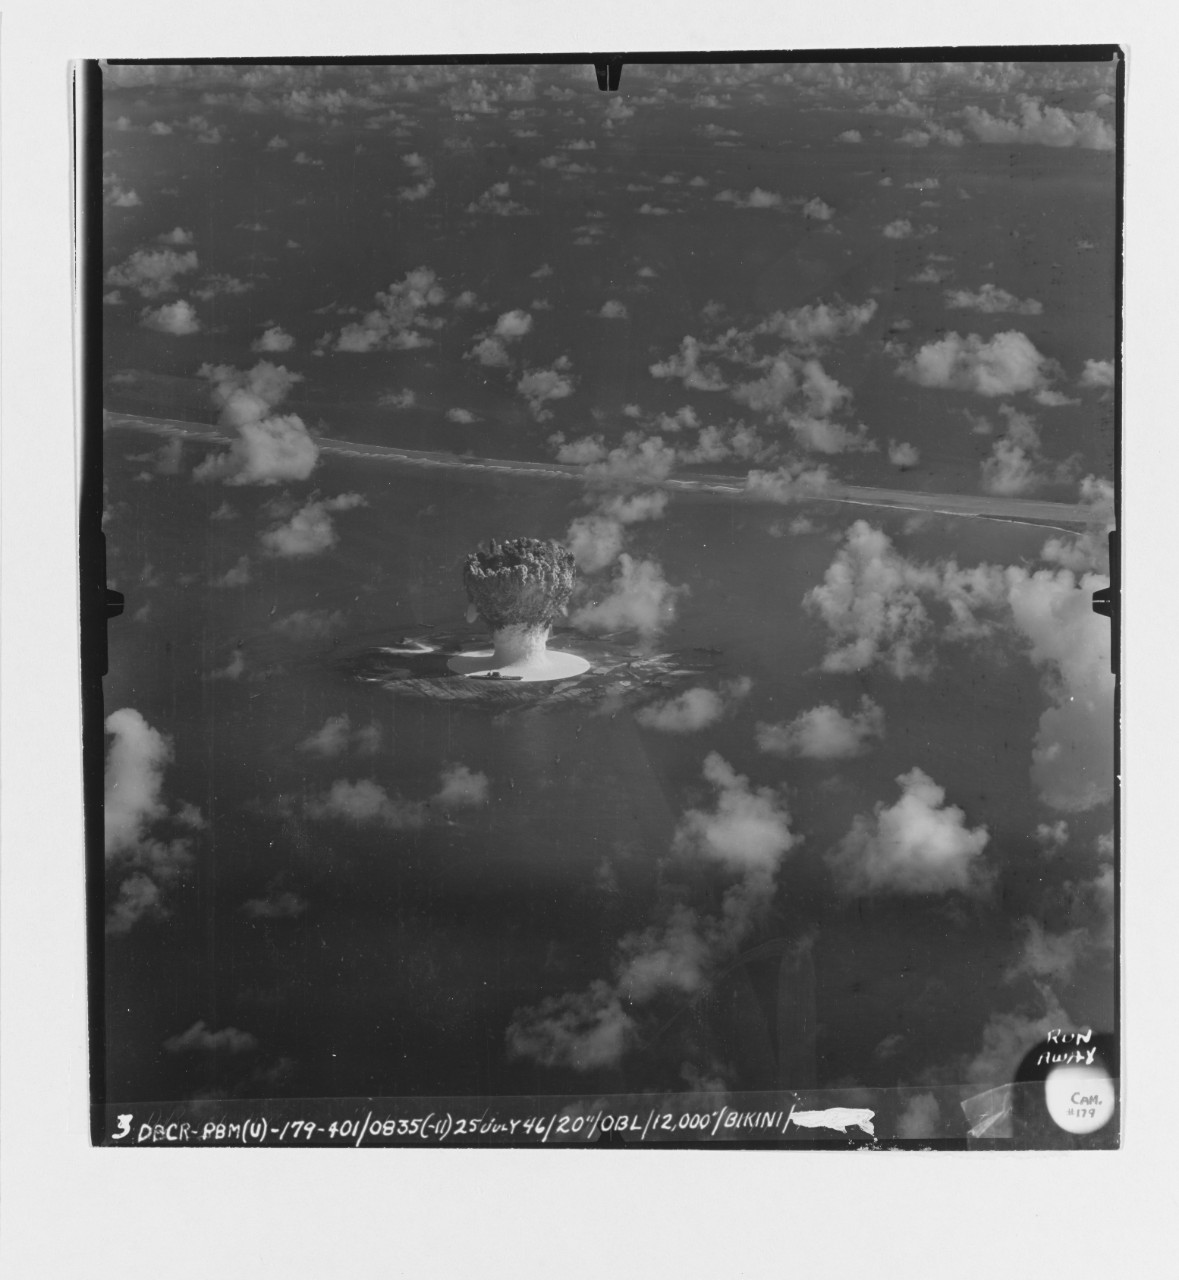 "Baker Day" atomic bomb test, Bikini Atoll, 25 July 1946